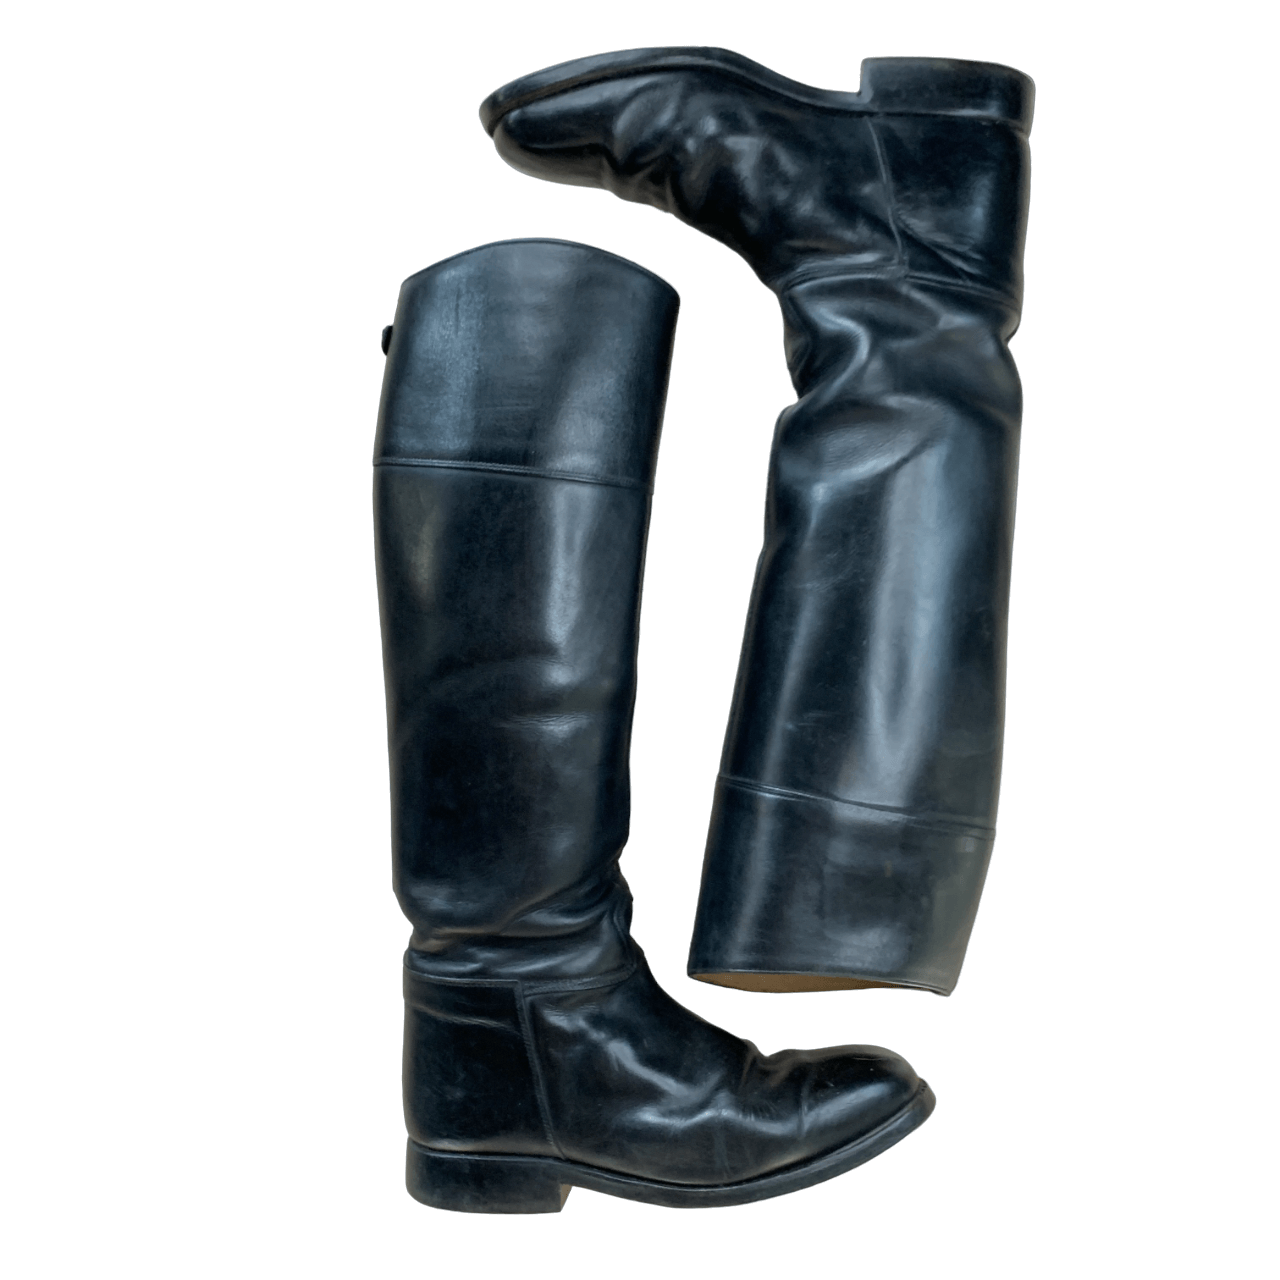 Cavallo Dress Boots in Black - Woman's 6.5